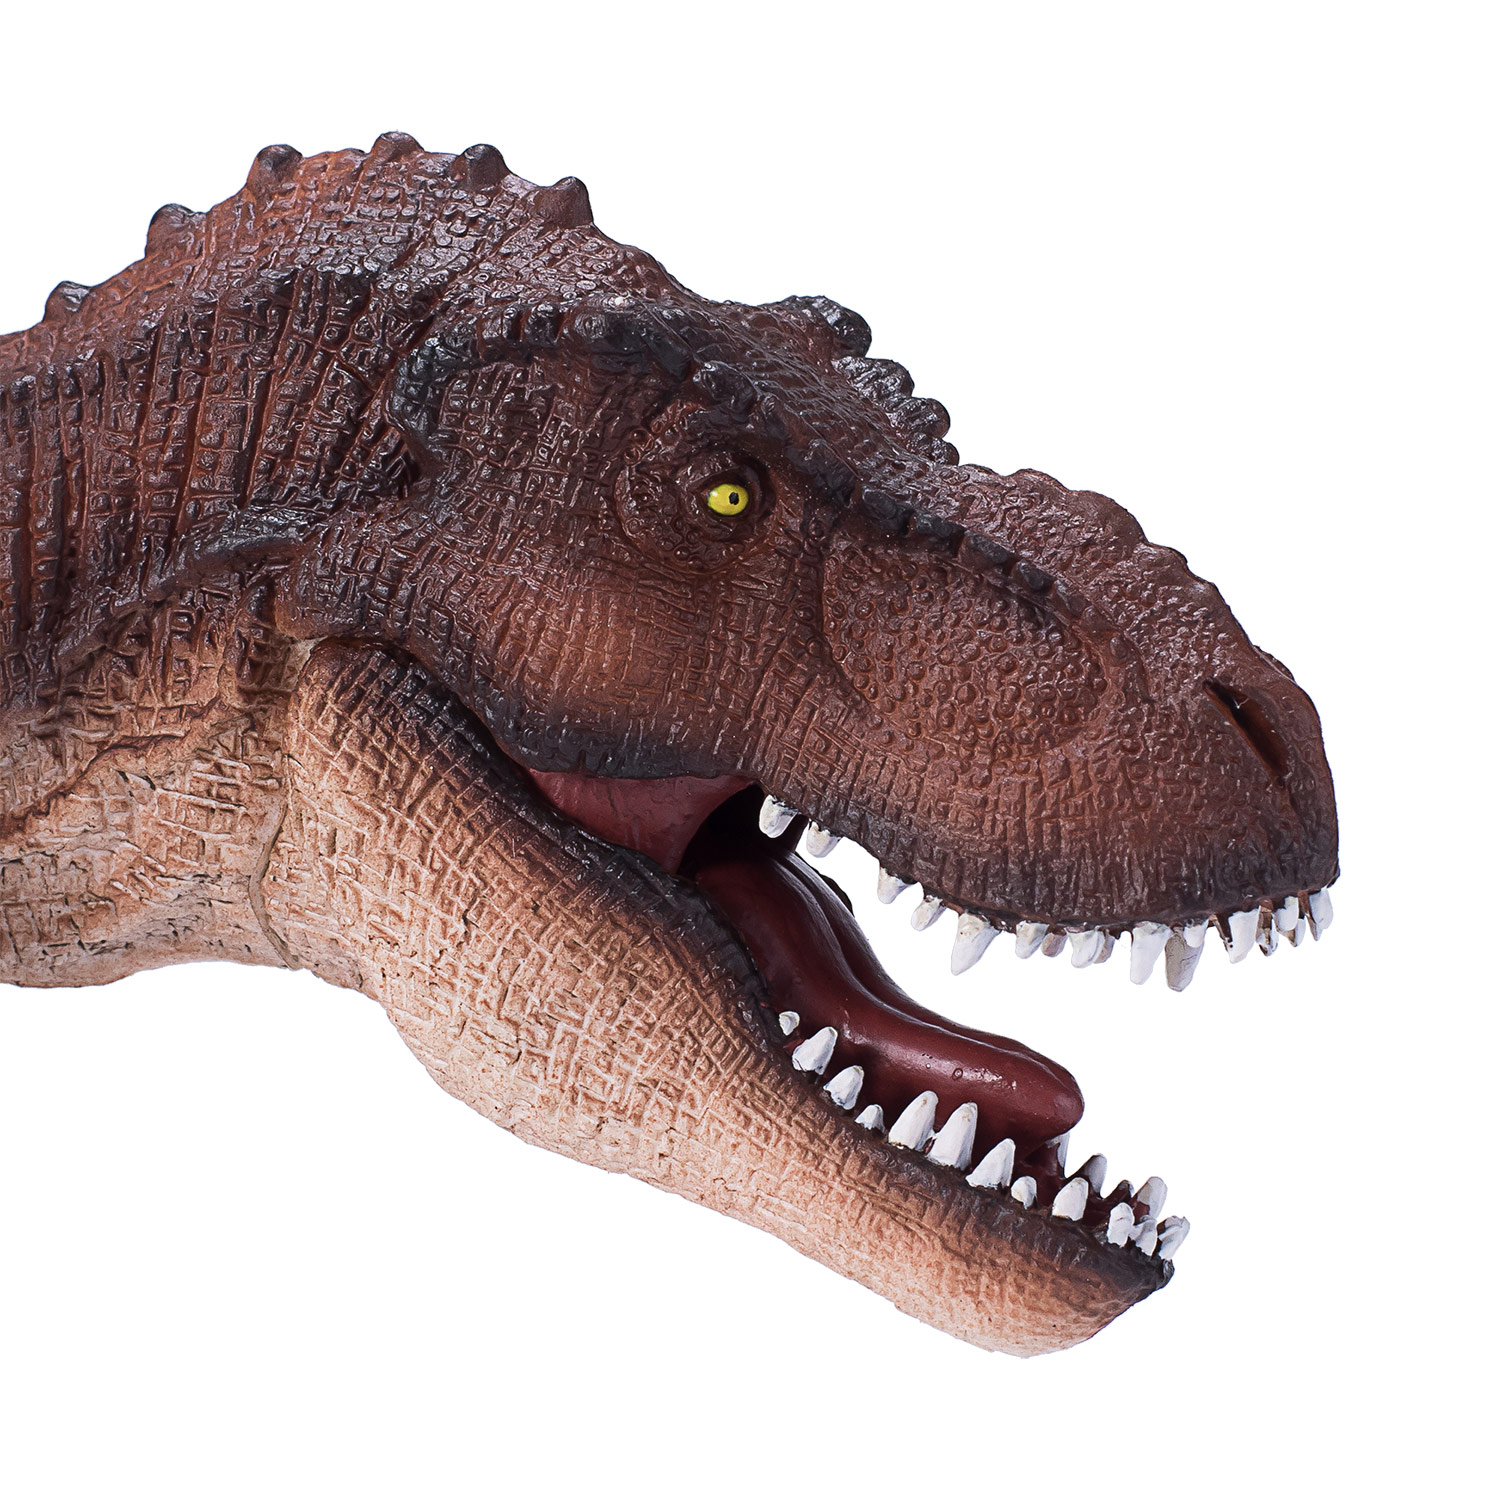 Mojo Prehistory Deluxe T-Rex mit beweglichem Kiefer – 387379